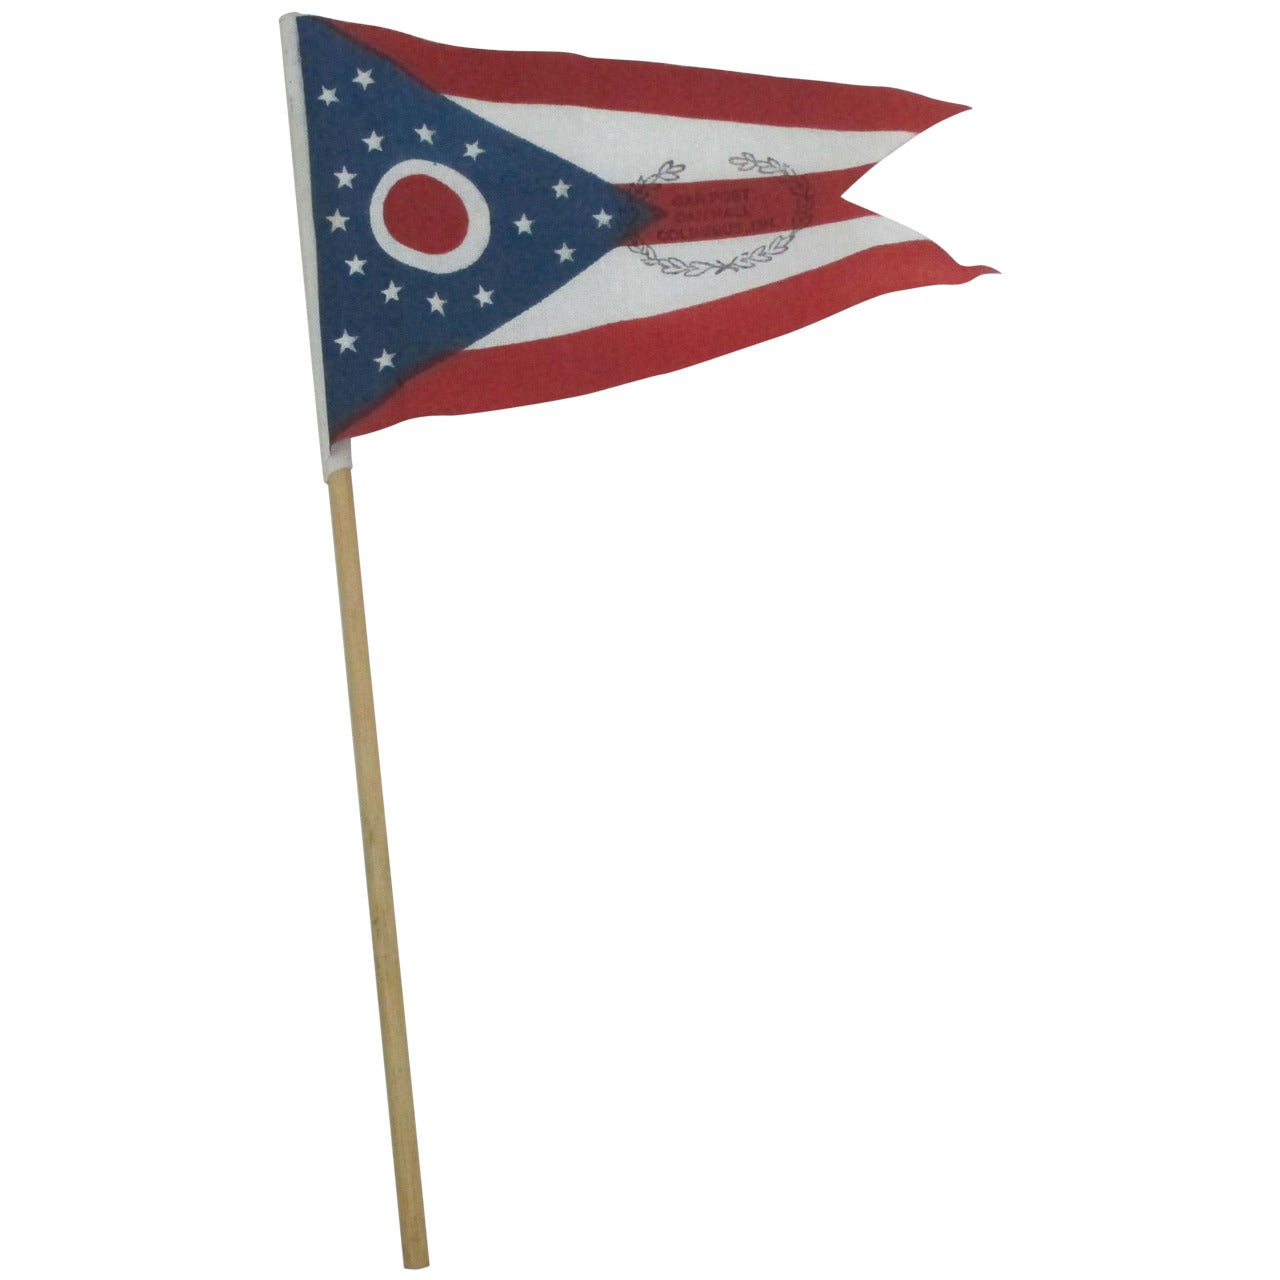 Ohio Parade Flag with GAR Overprinting